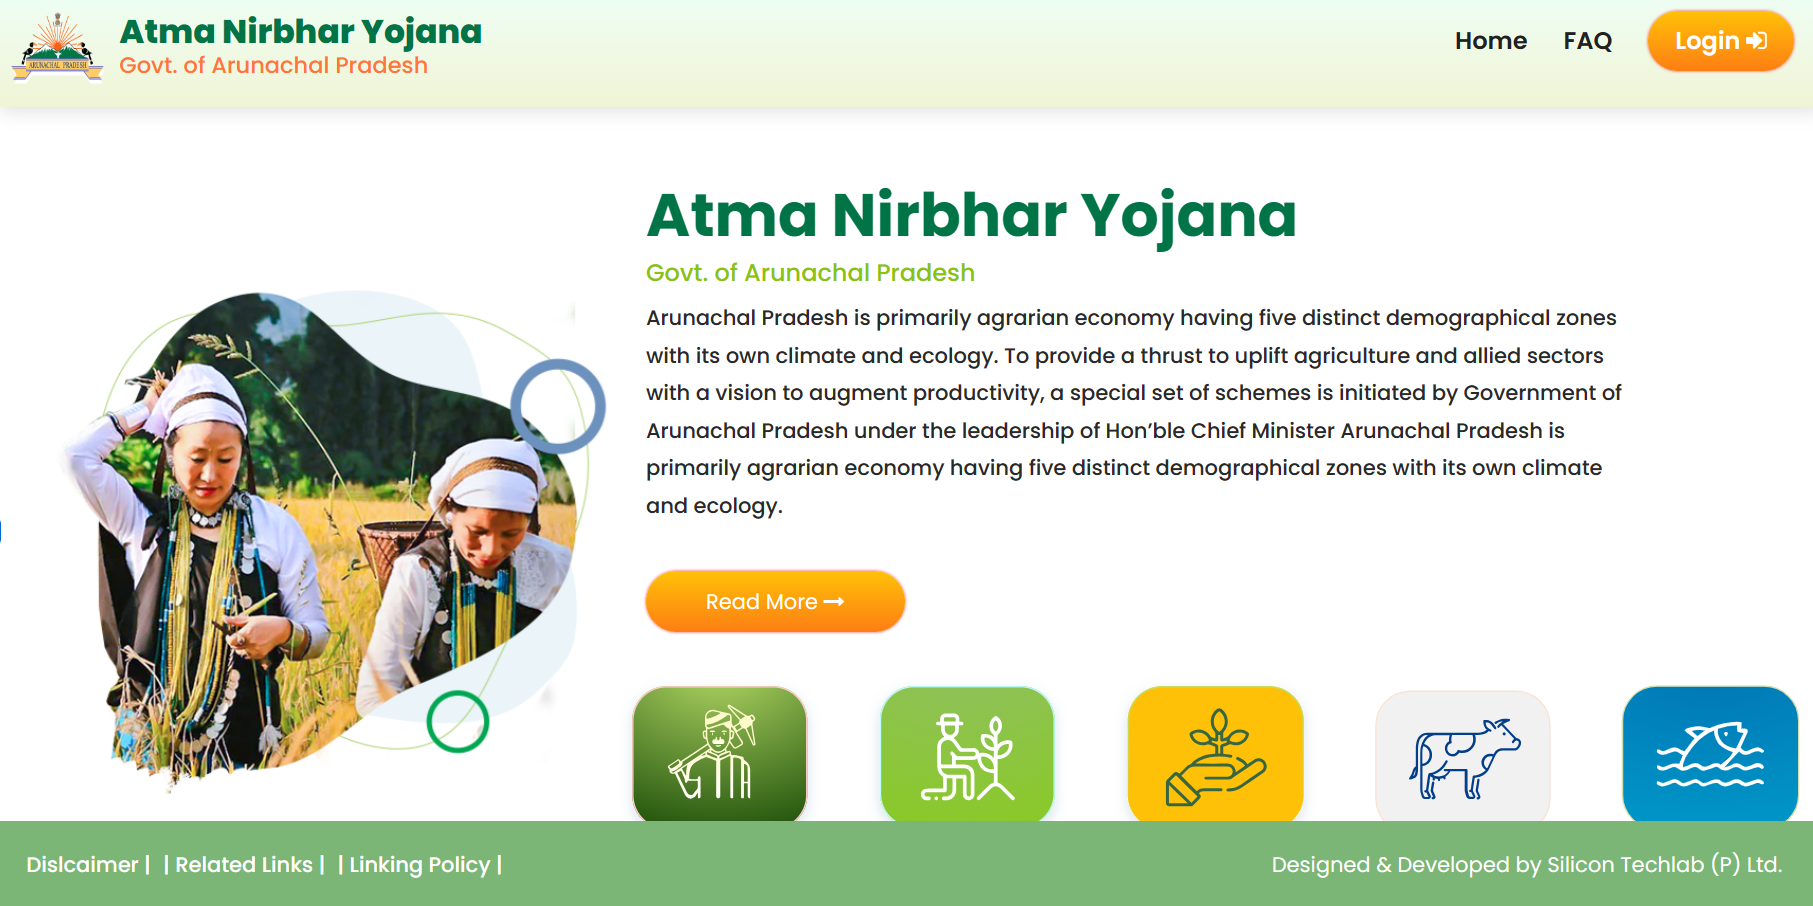 aatmanirbhar yojana, arunachal pradesh, agriculture news